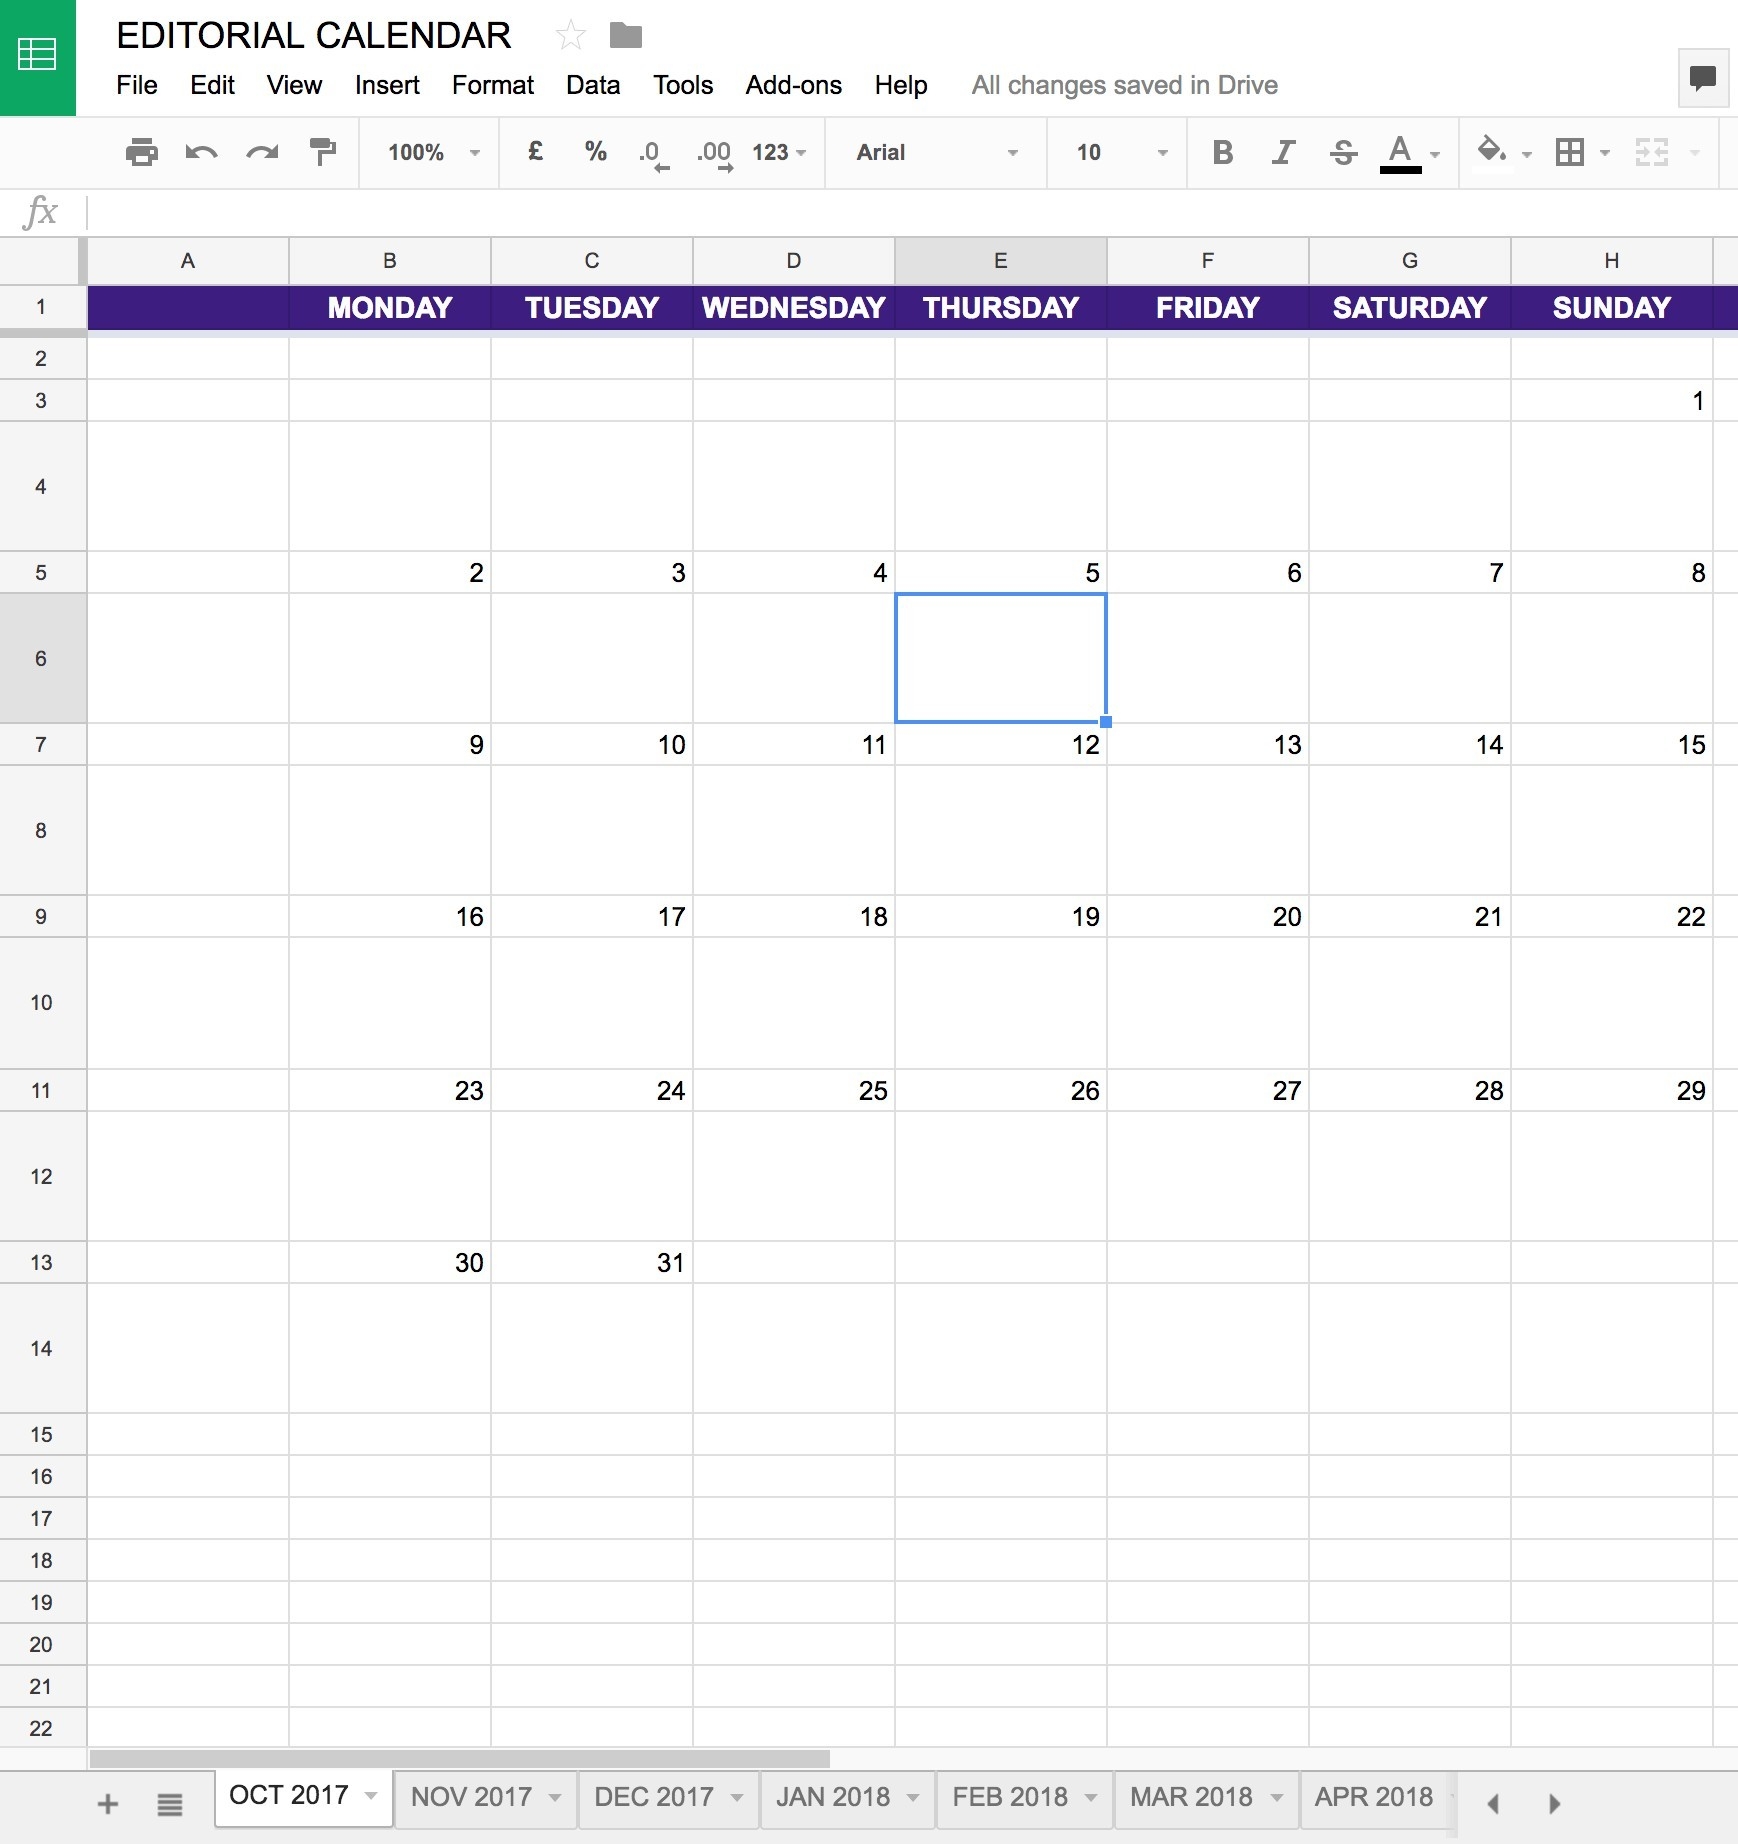 Google Drive Calendar Template - Free Calendar Collection-Free Google Drive Template For Calendar